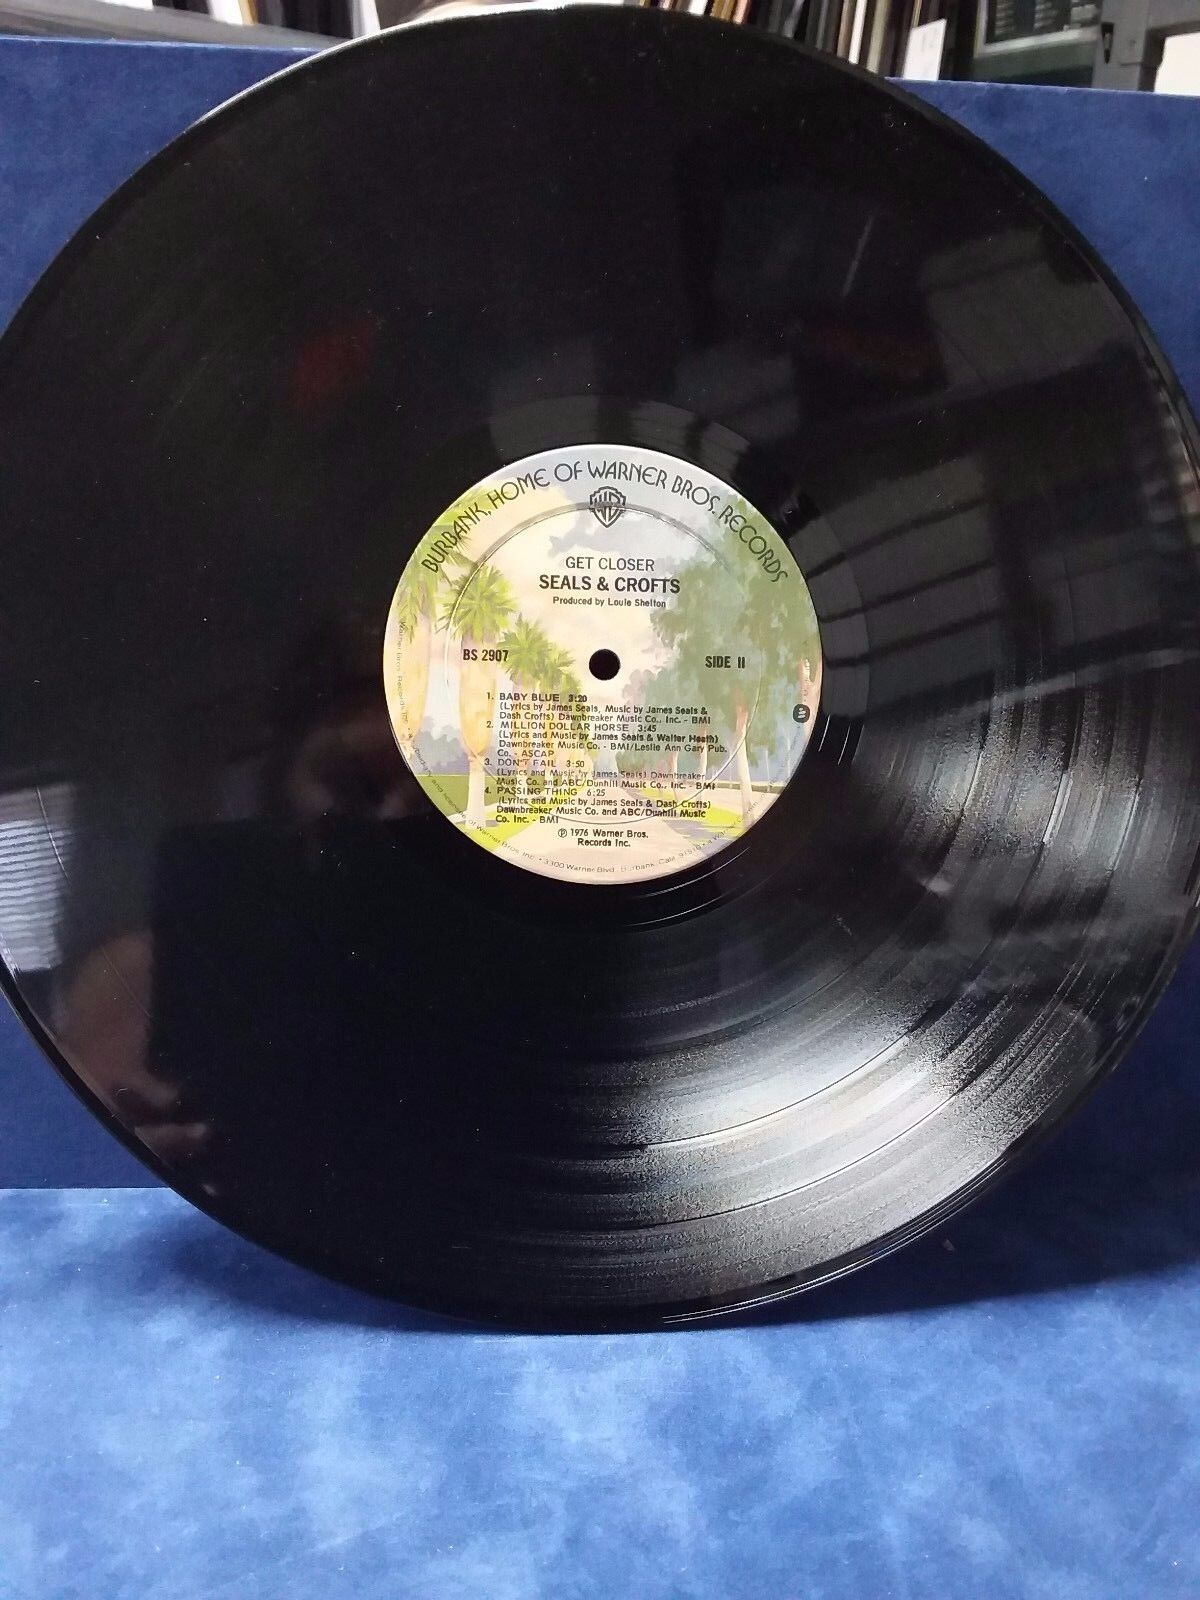 SEALED SEALS & CROFTS GET CLOSER LP 1976 WARNER BROS RECORDS USED